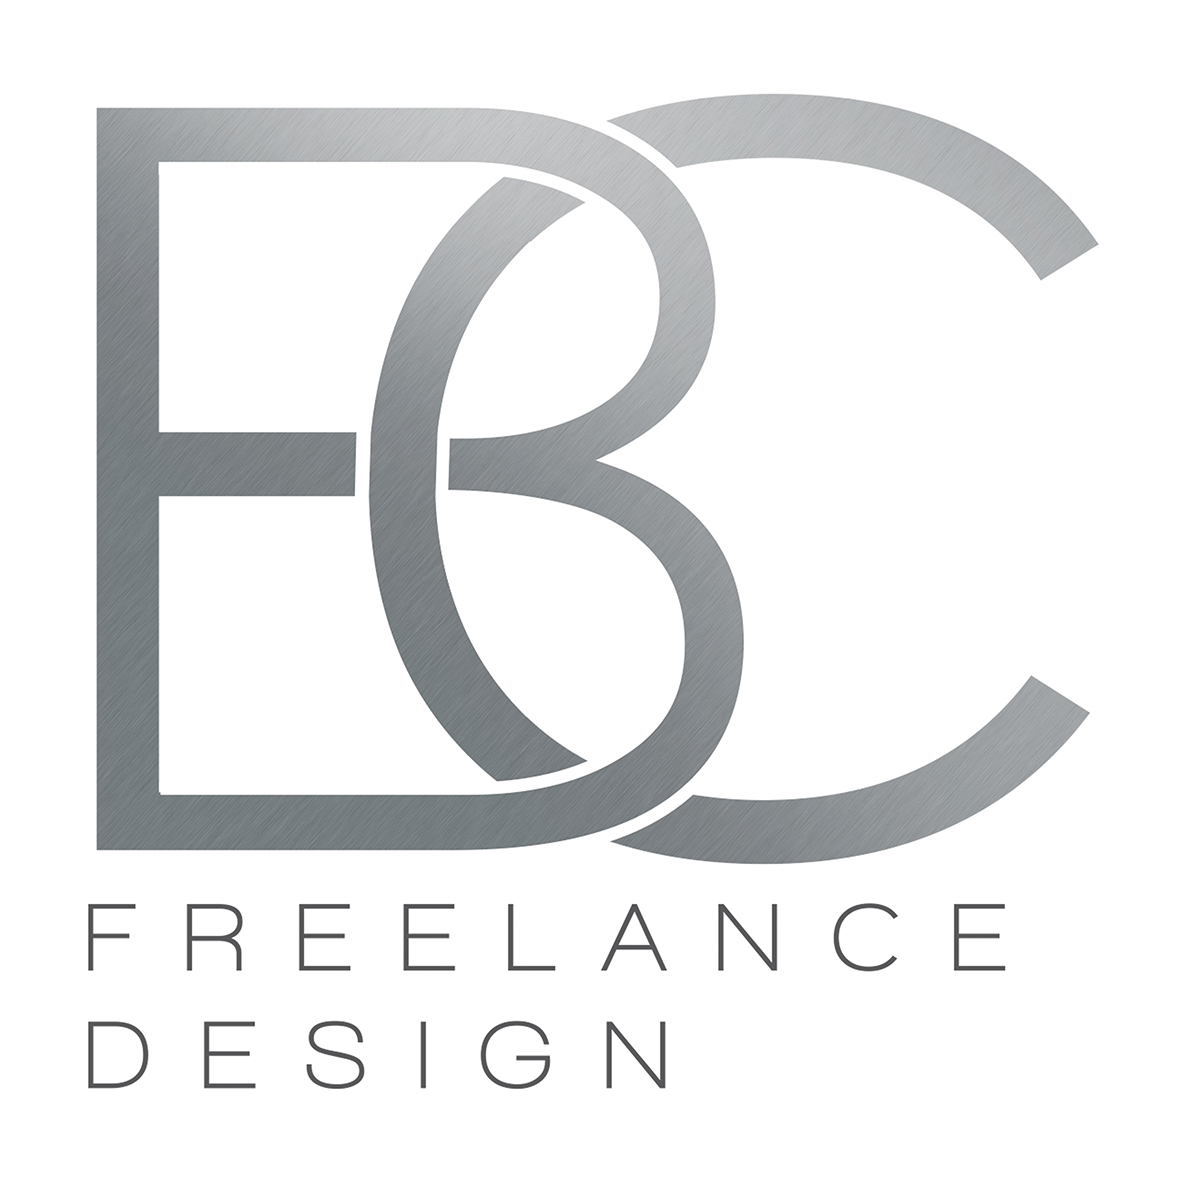 BC freelance design - Yamba Accommodation